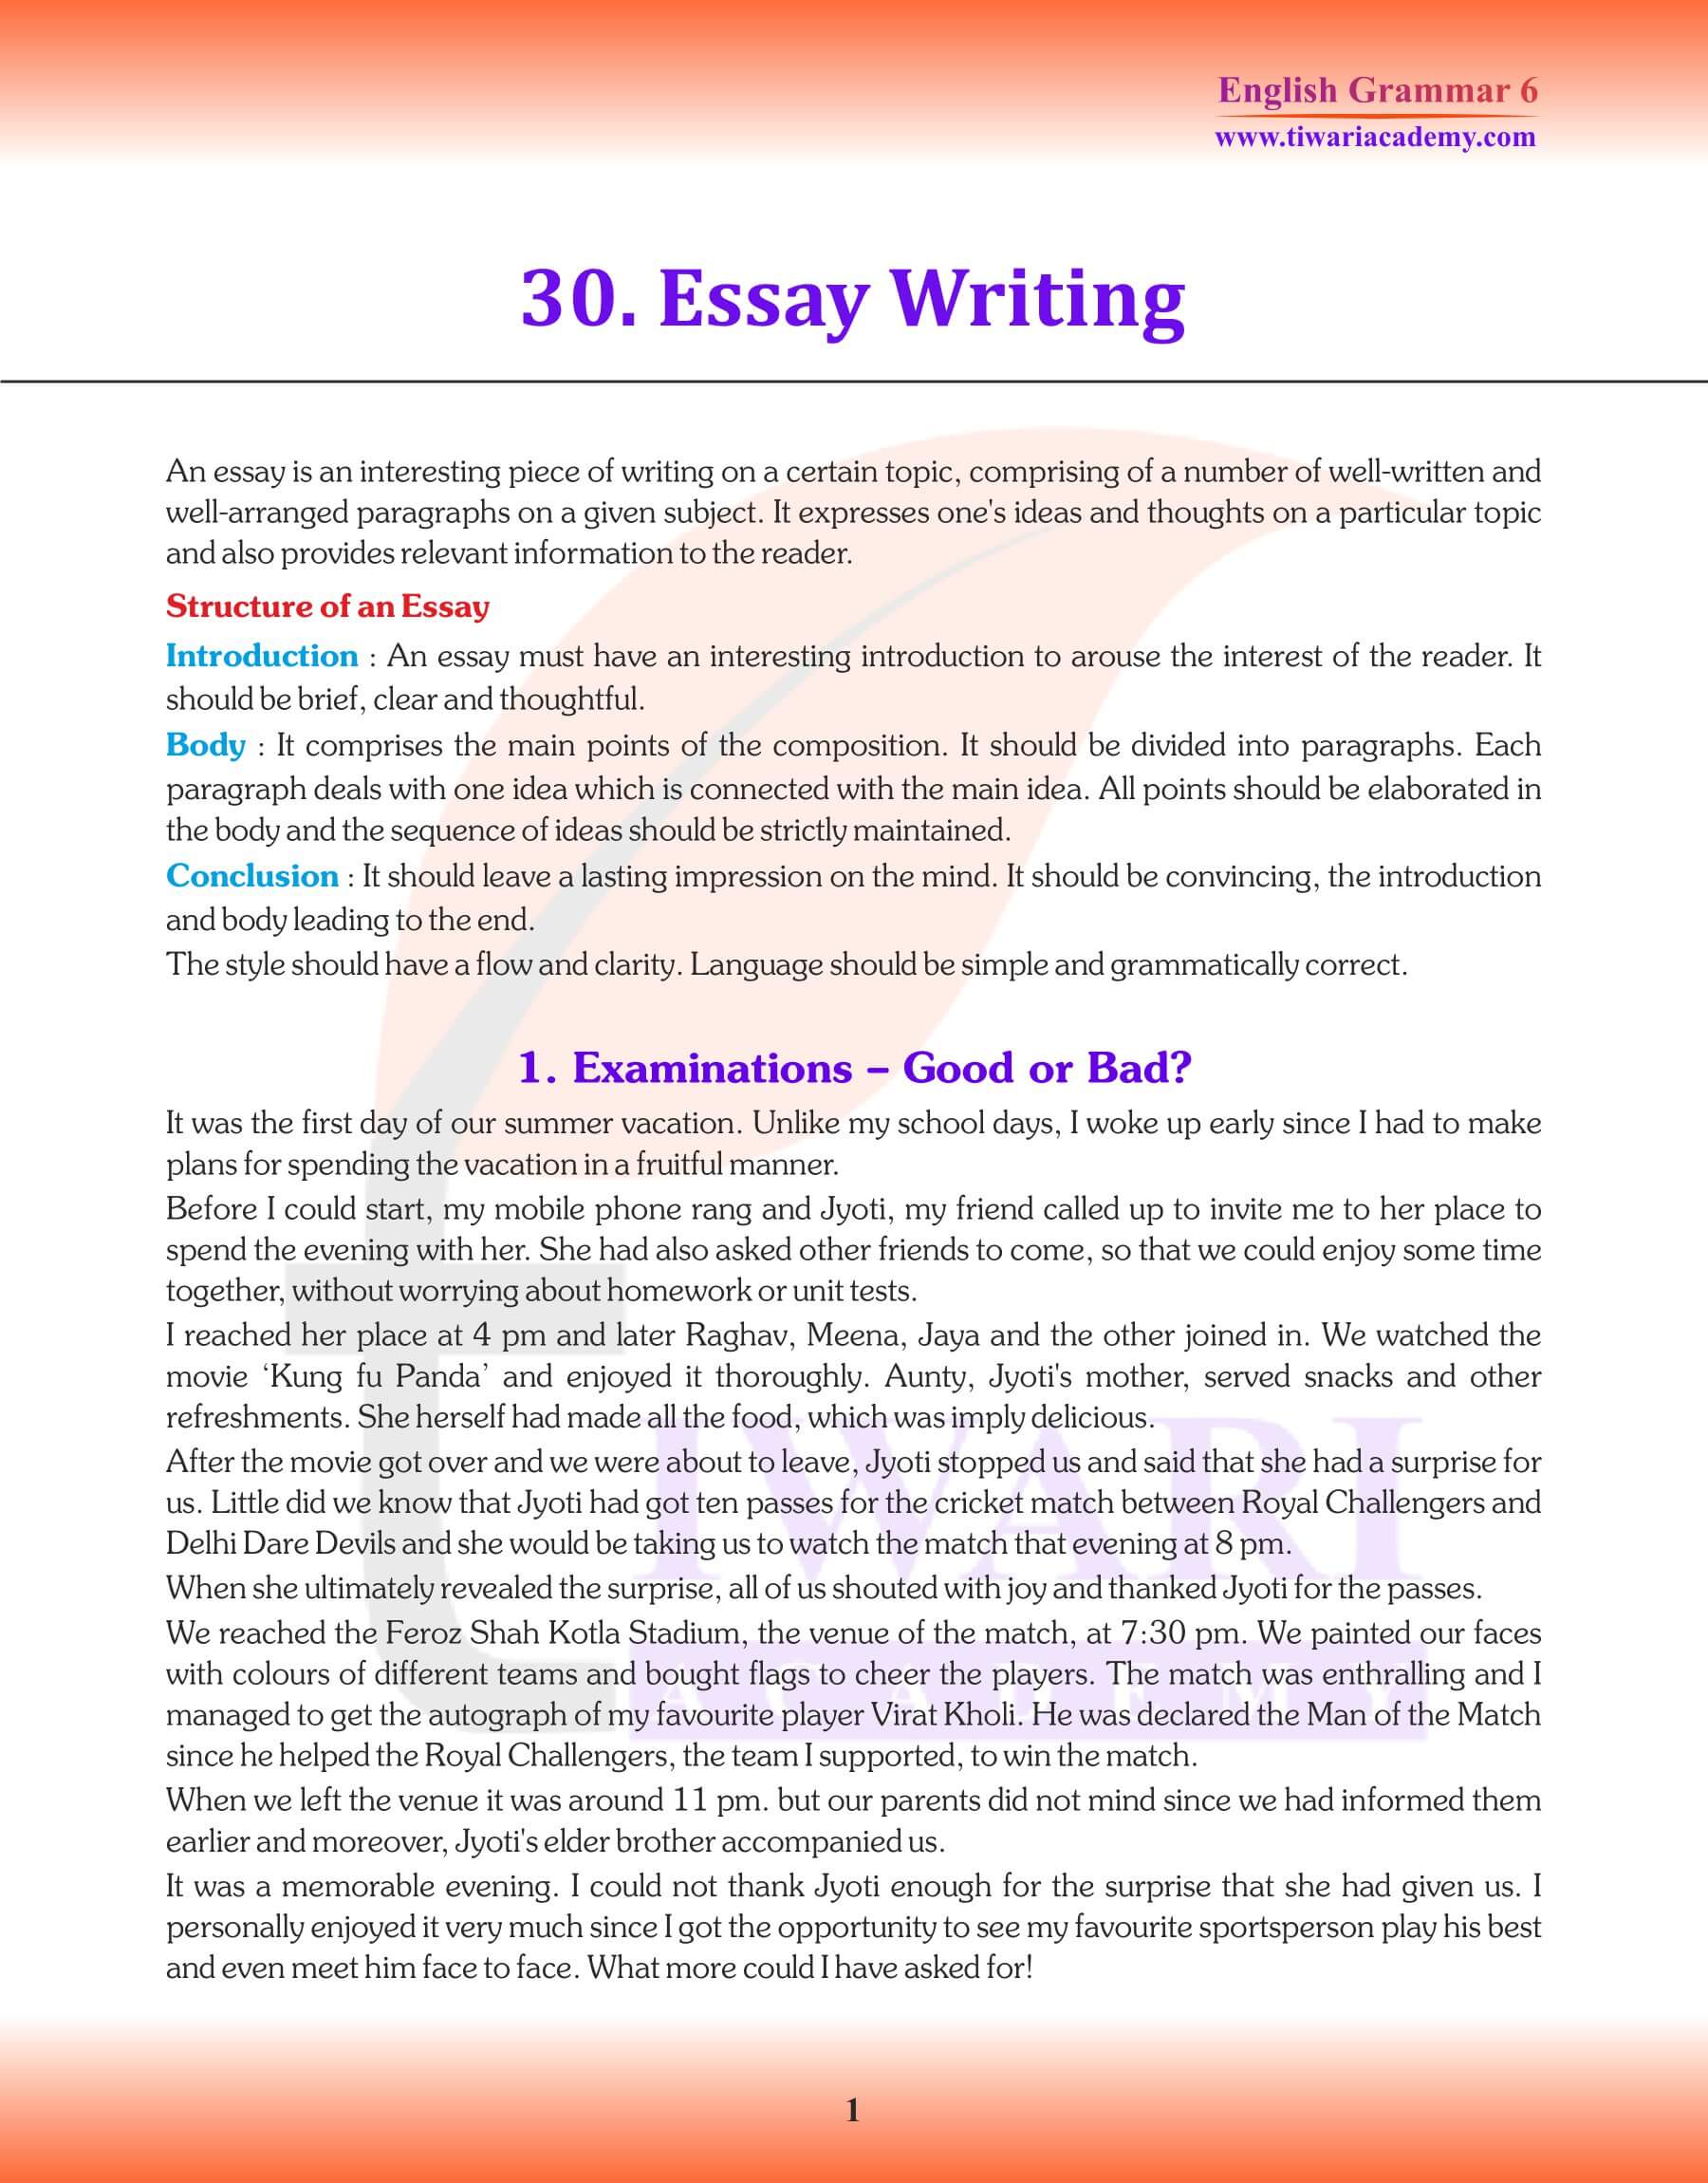 Class 6 Grammar Essay Writing Revision book